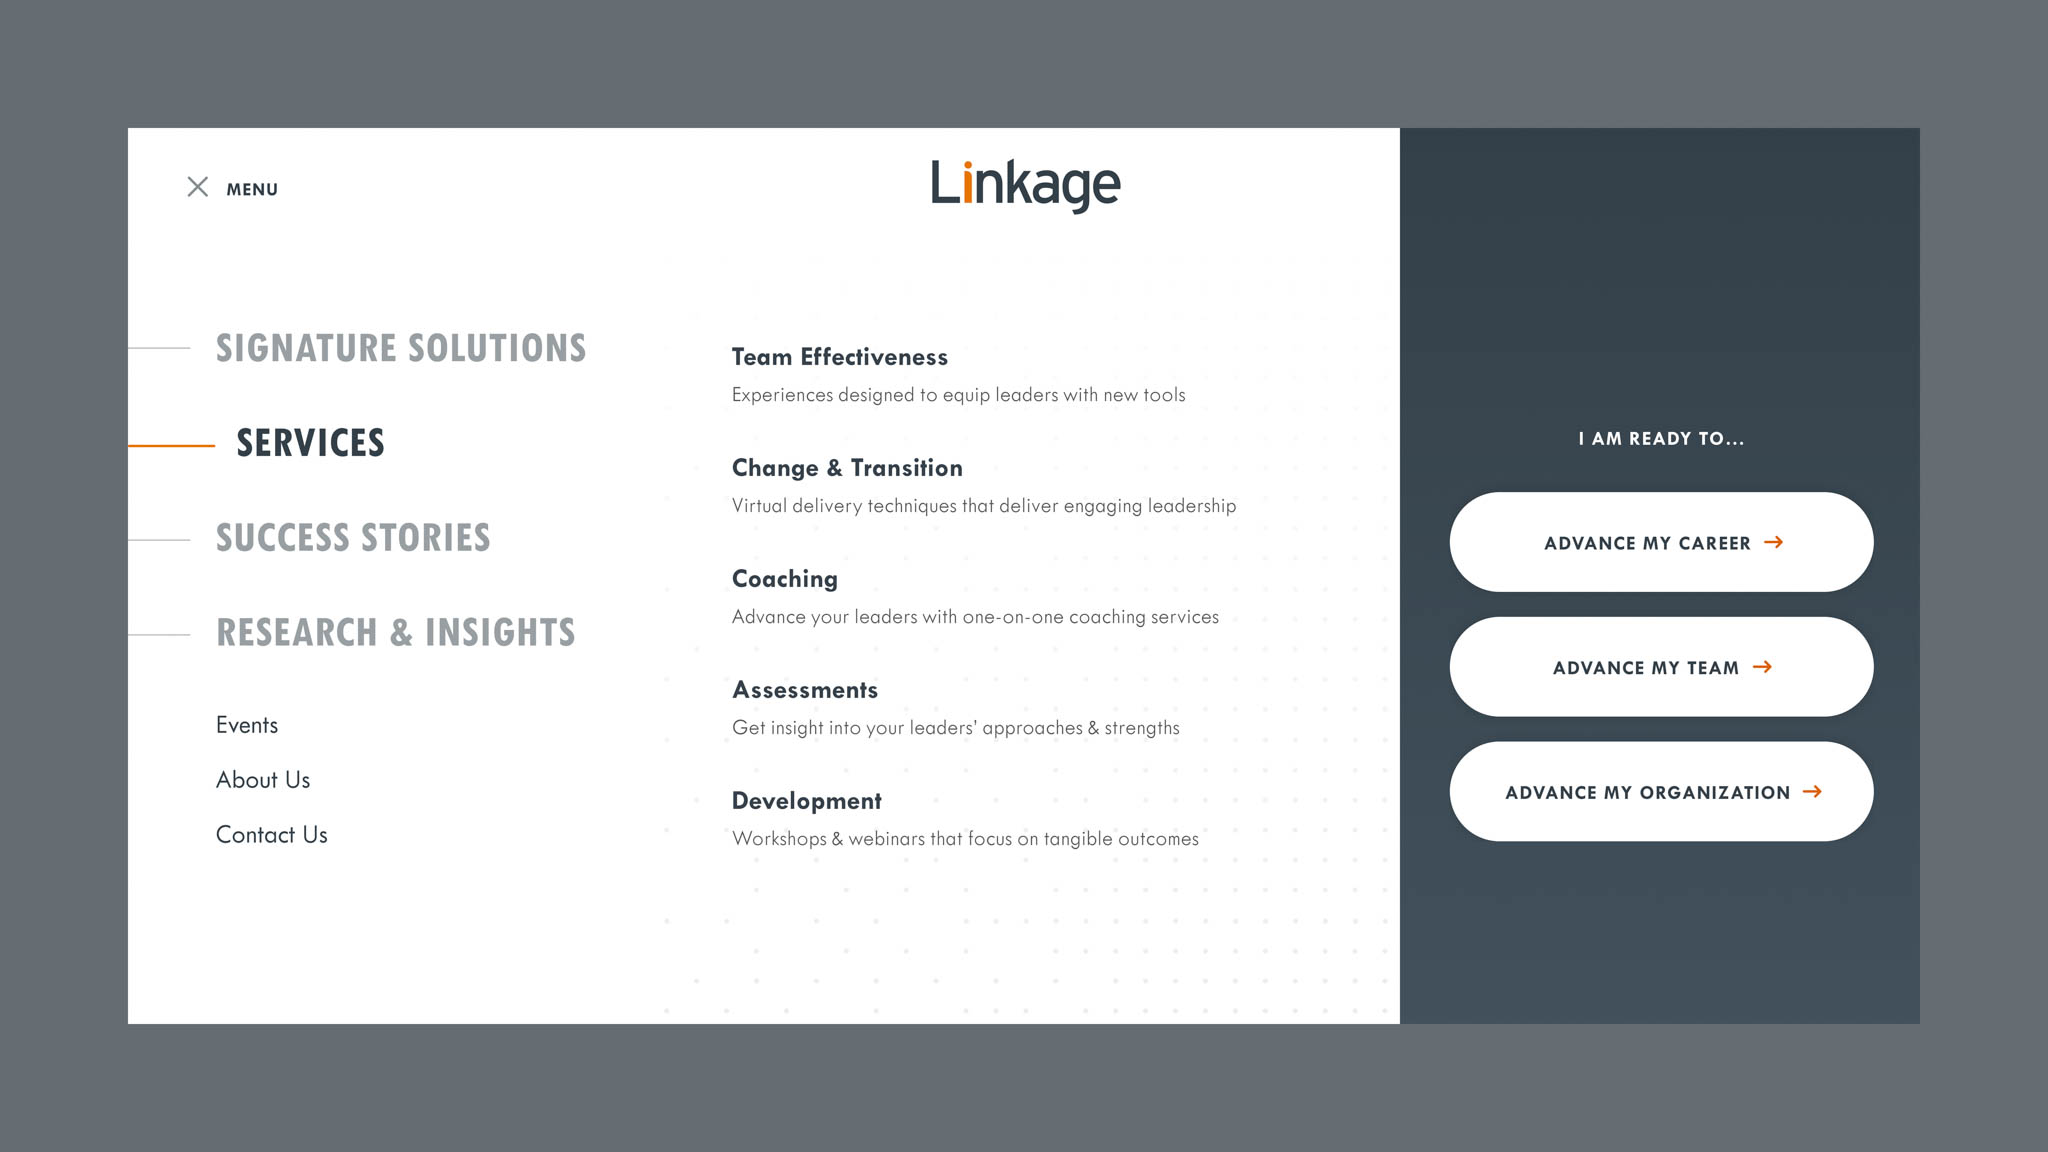 Linkage website menu navigation.